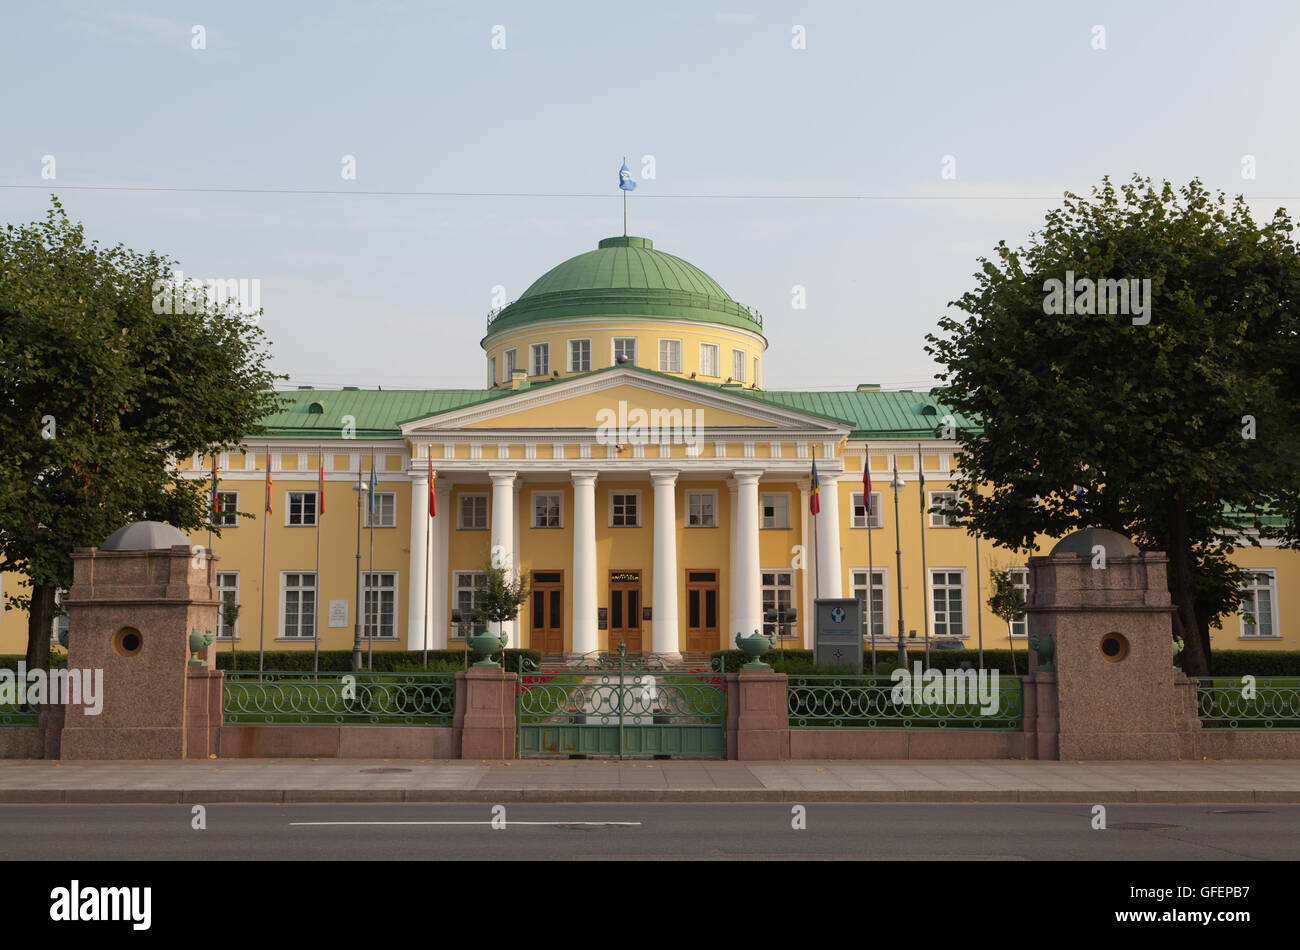 Tauride Palace, Shpalernaya Street, St. Petersburg, Russia. Stock Photo